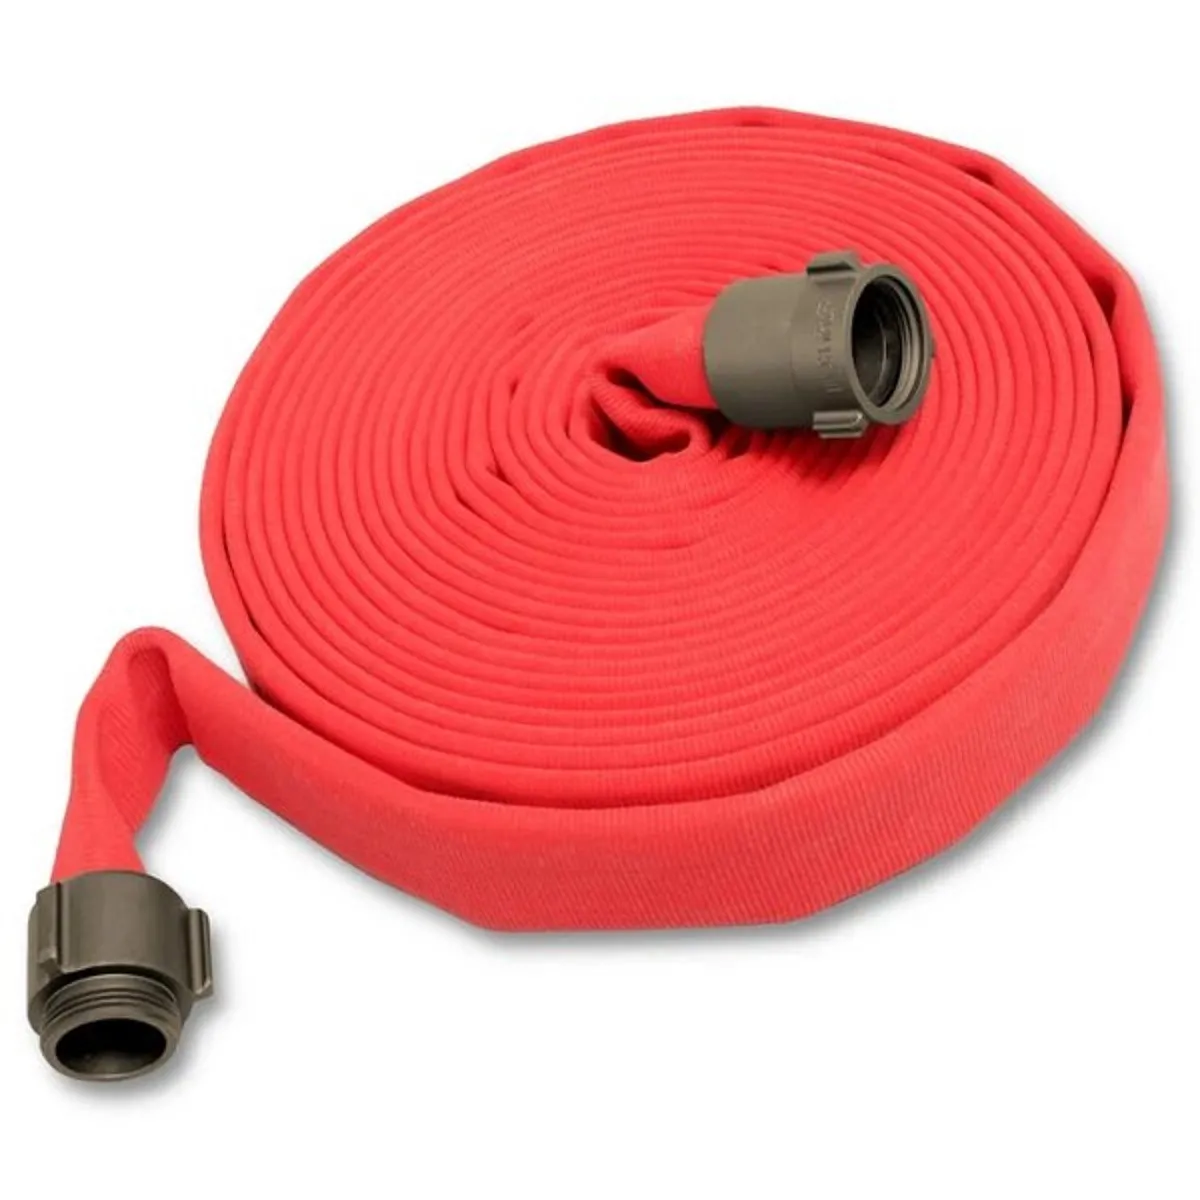 2 1 2 inch fire hose in Hose Reel Online Shopping